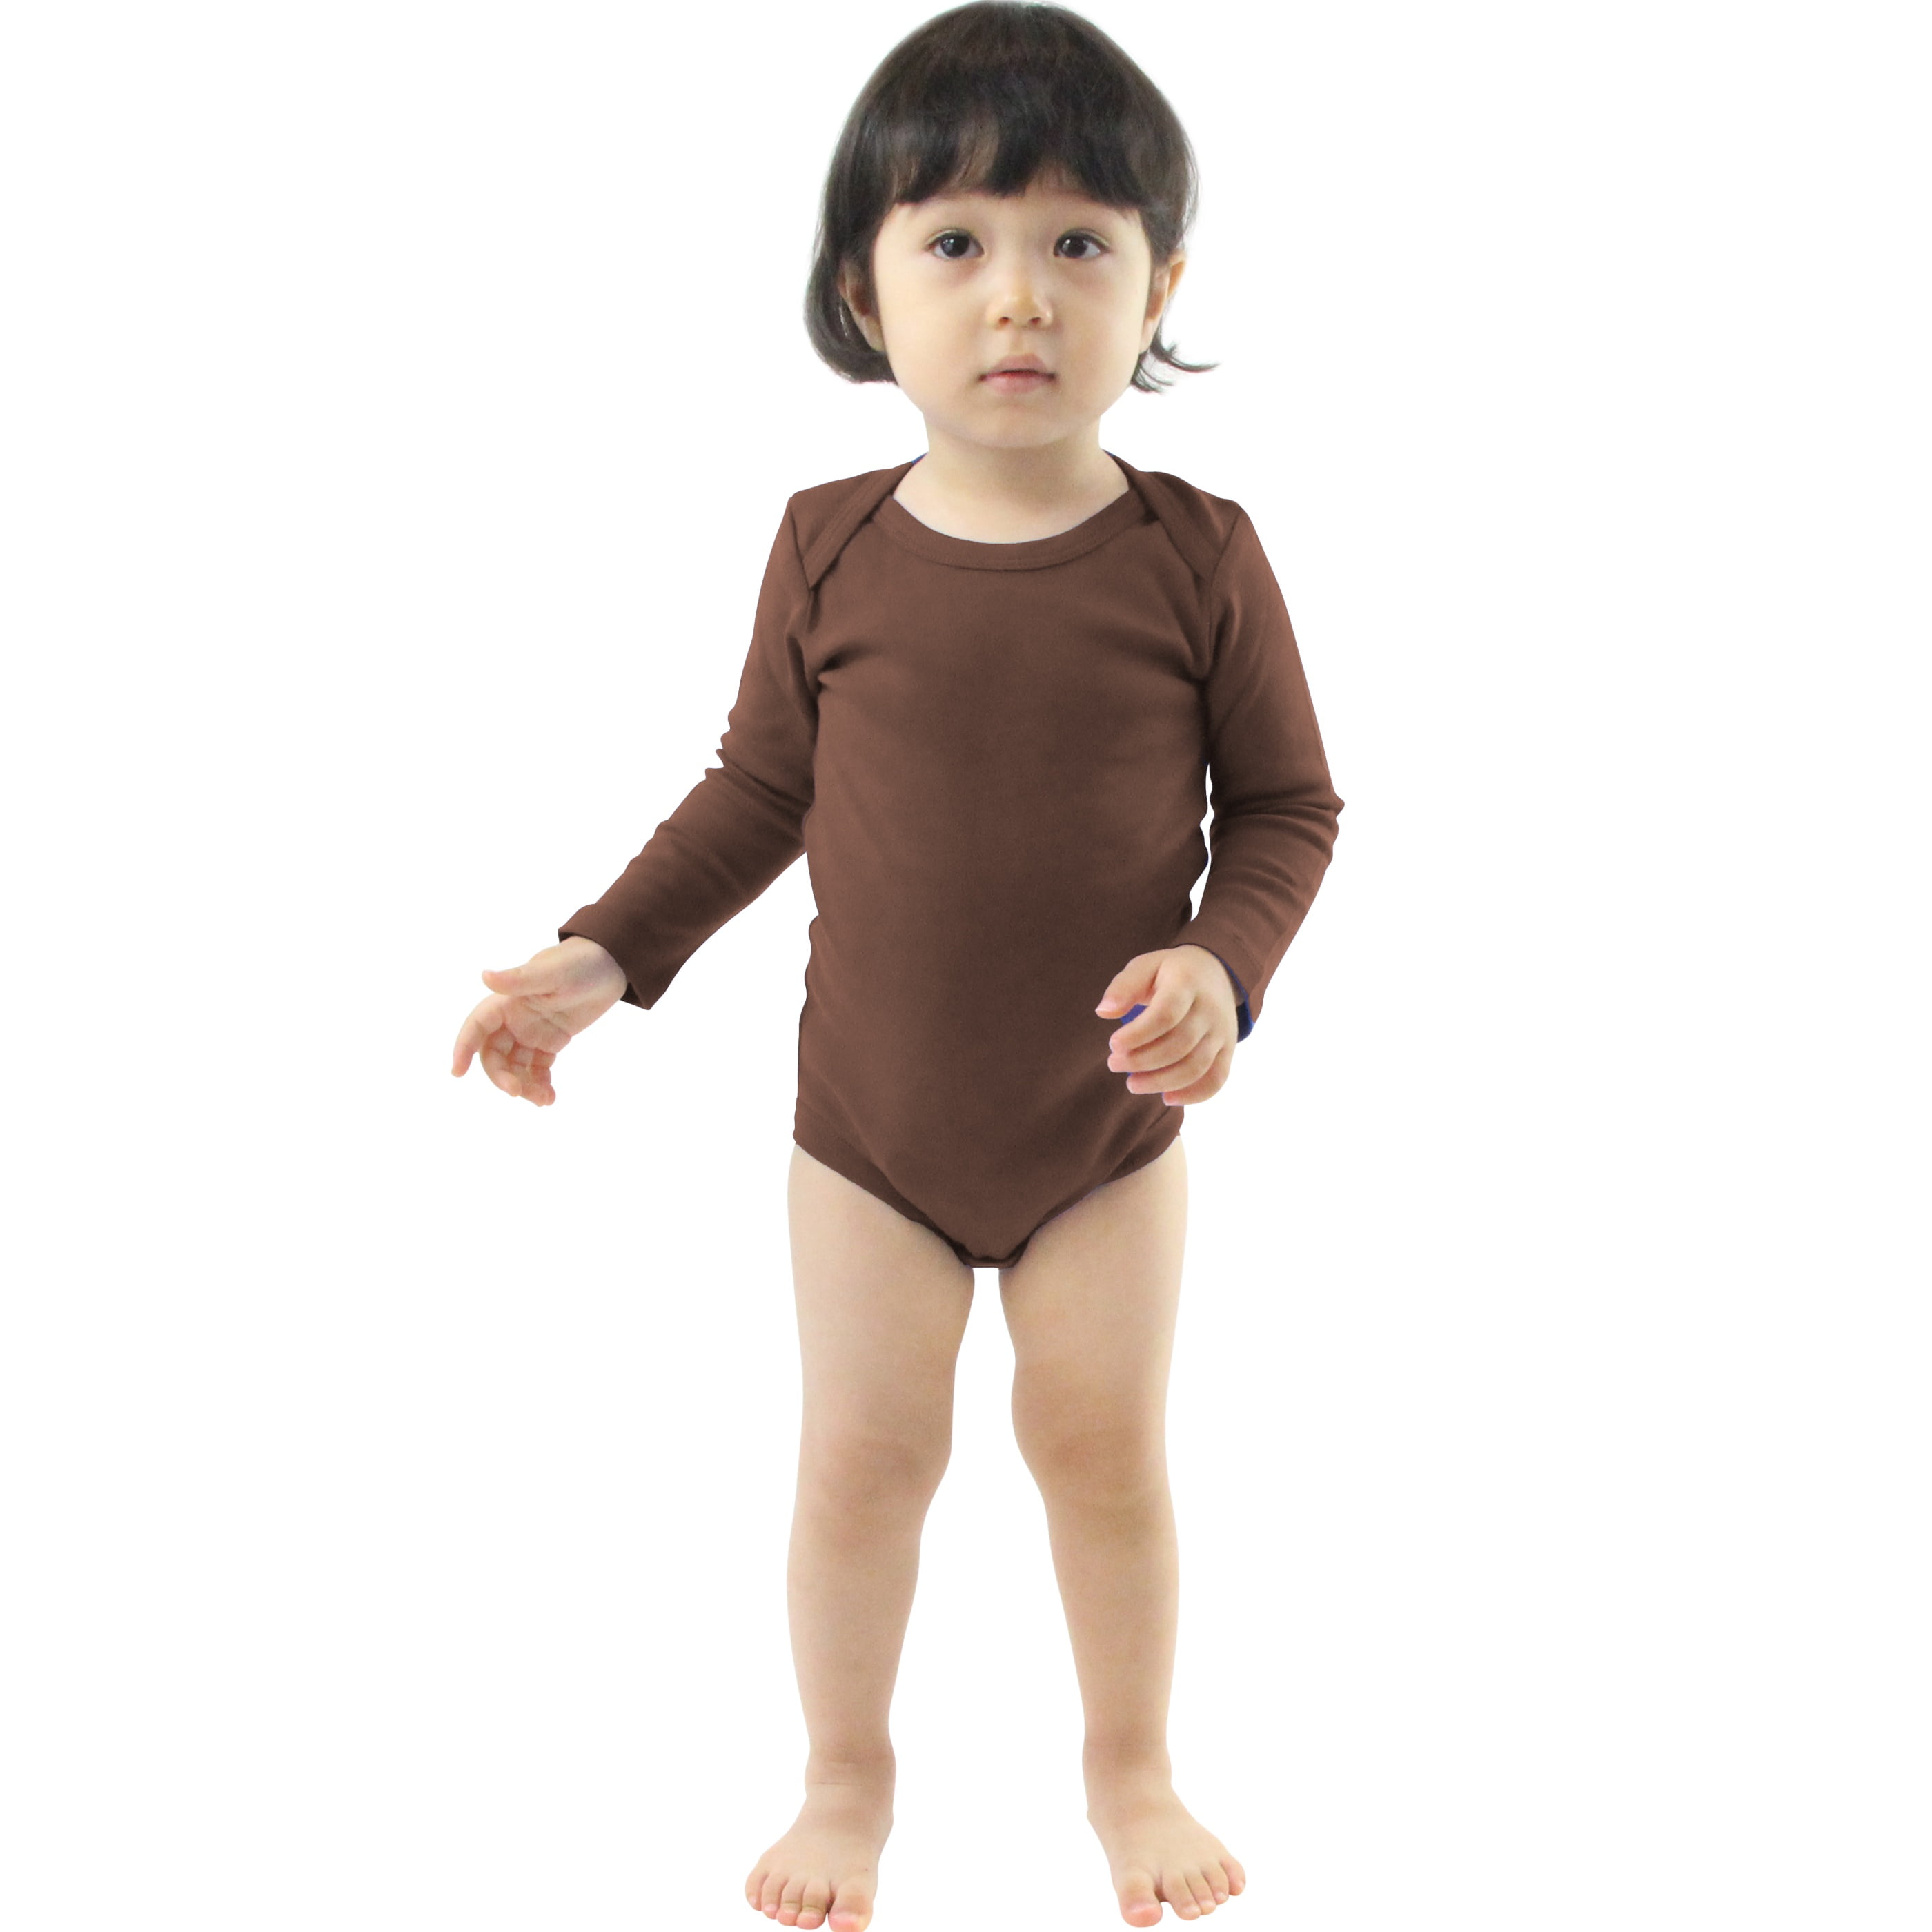 Couver Baby Cotton Longsleeve Onesie Infant Toddler Lap Shoulder Solid Color Bodysuit, Brown, 24M